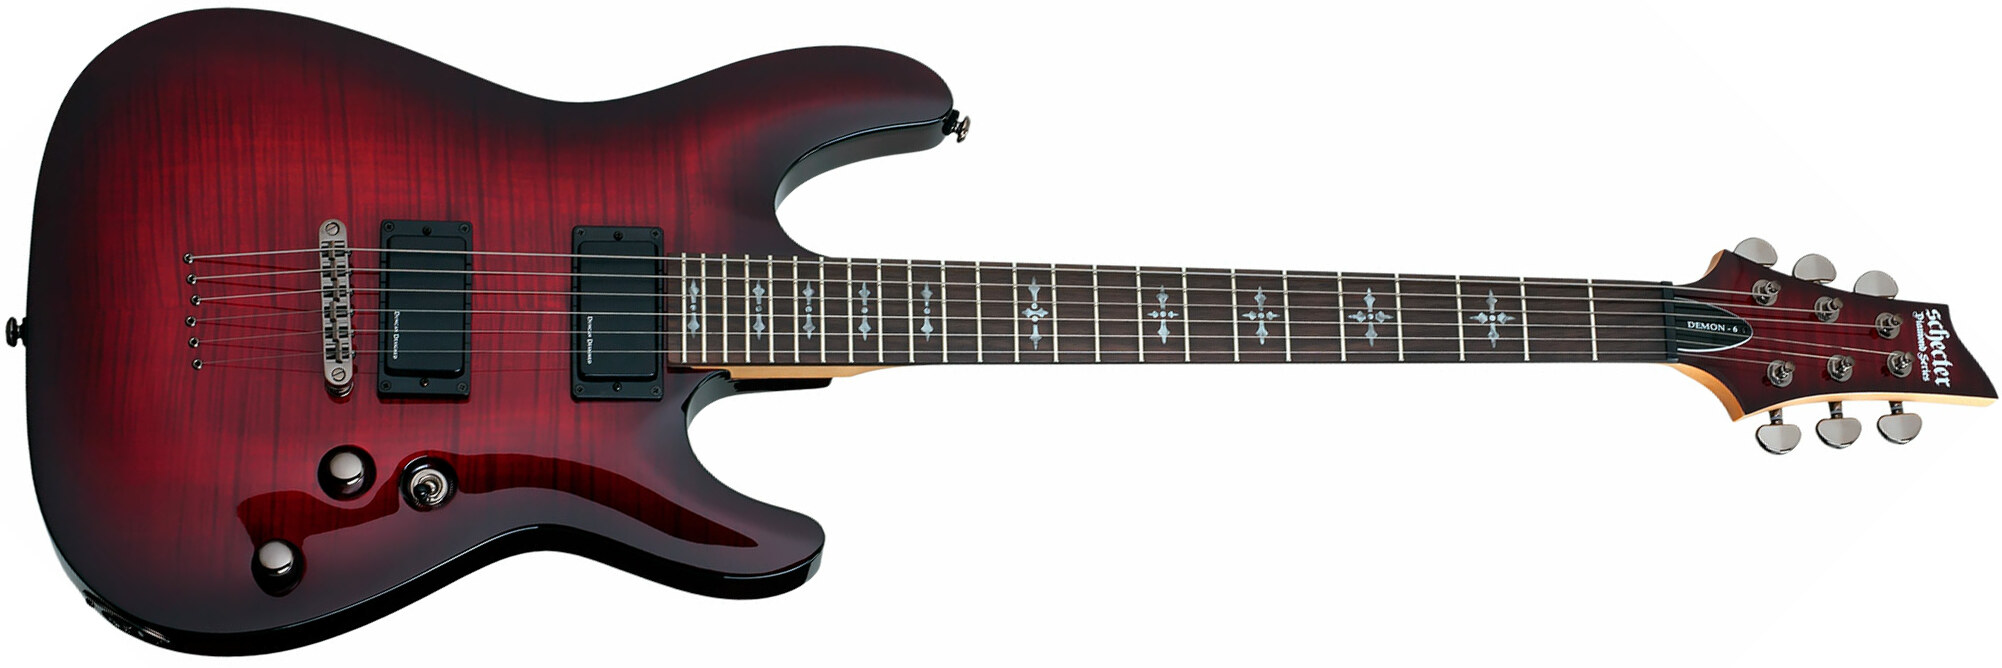 Schecter Demon-6 2h Ht Rw - Crimson Red Burst - Str shape electric guitar - Main picture